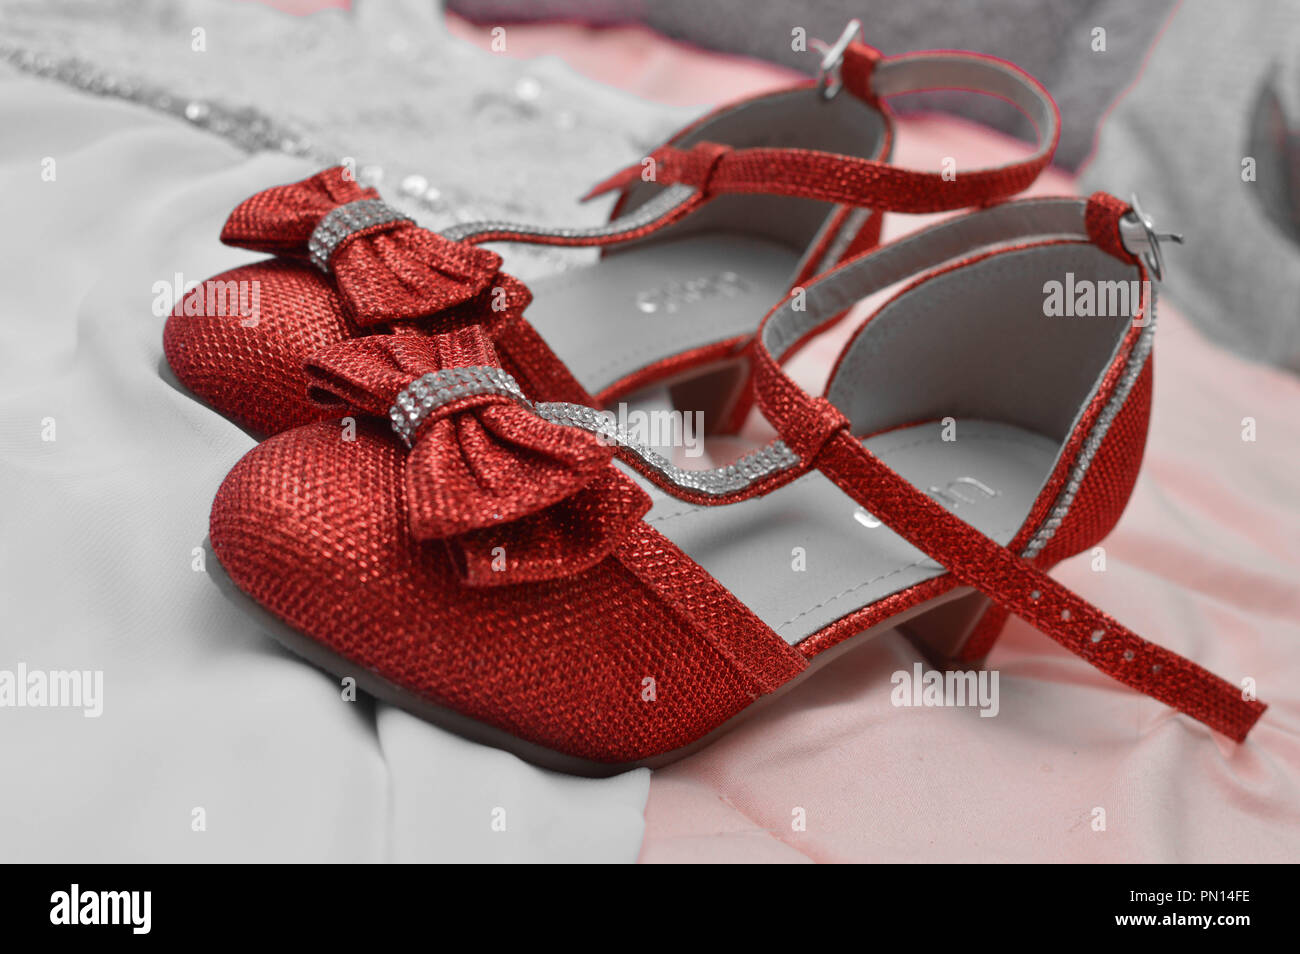 Zapatos rojos de chicas e imágenes de alta resolución - Alamy